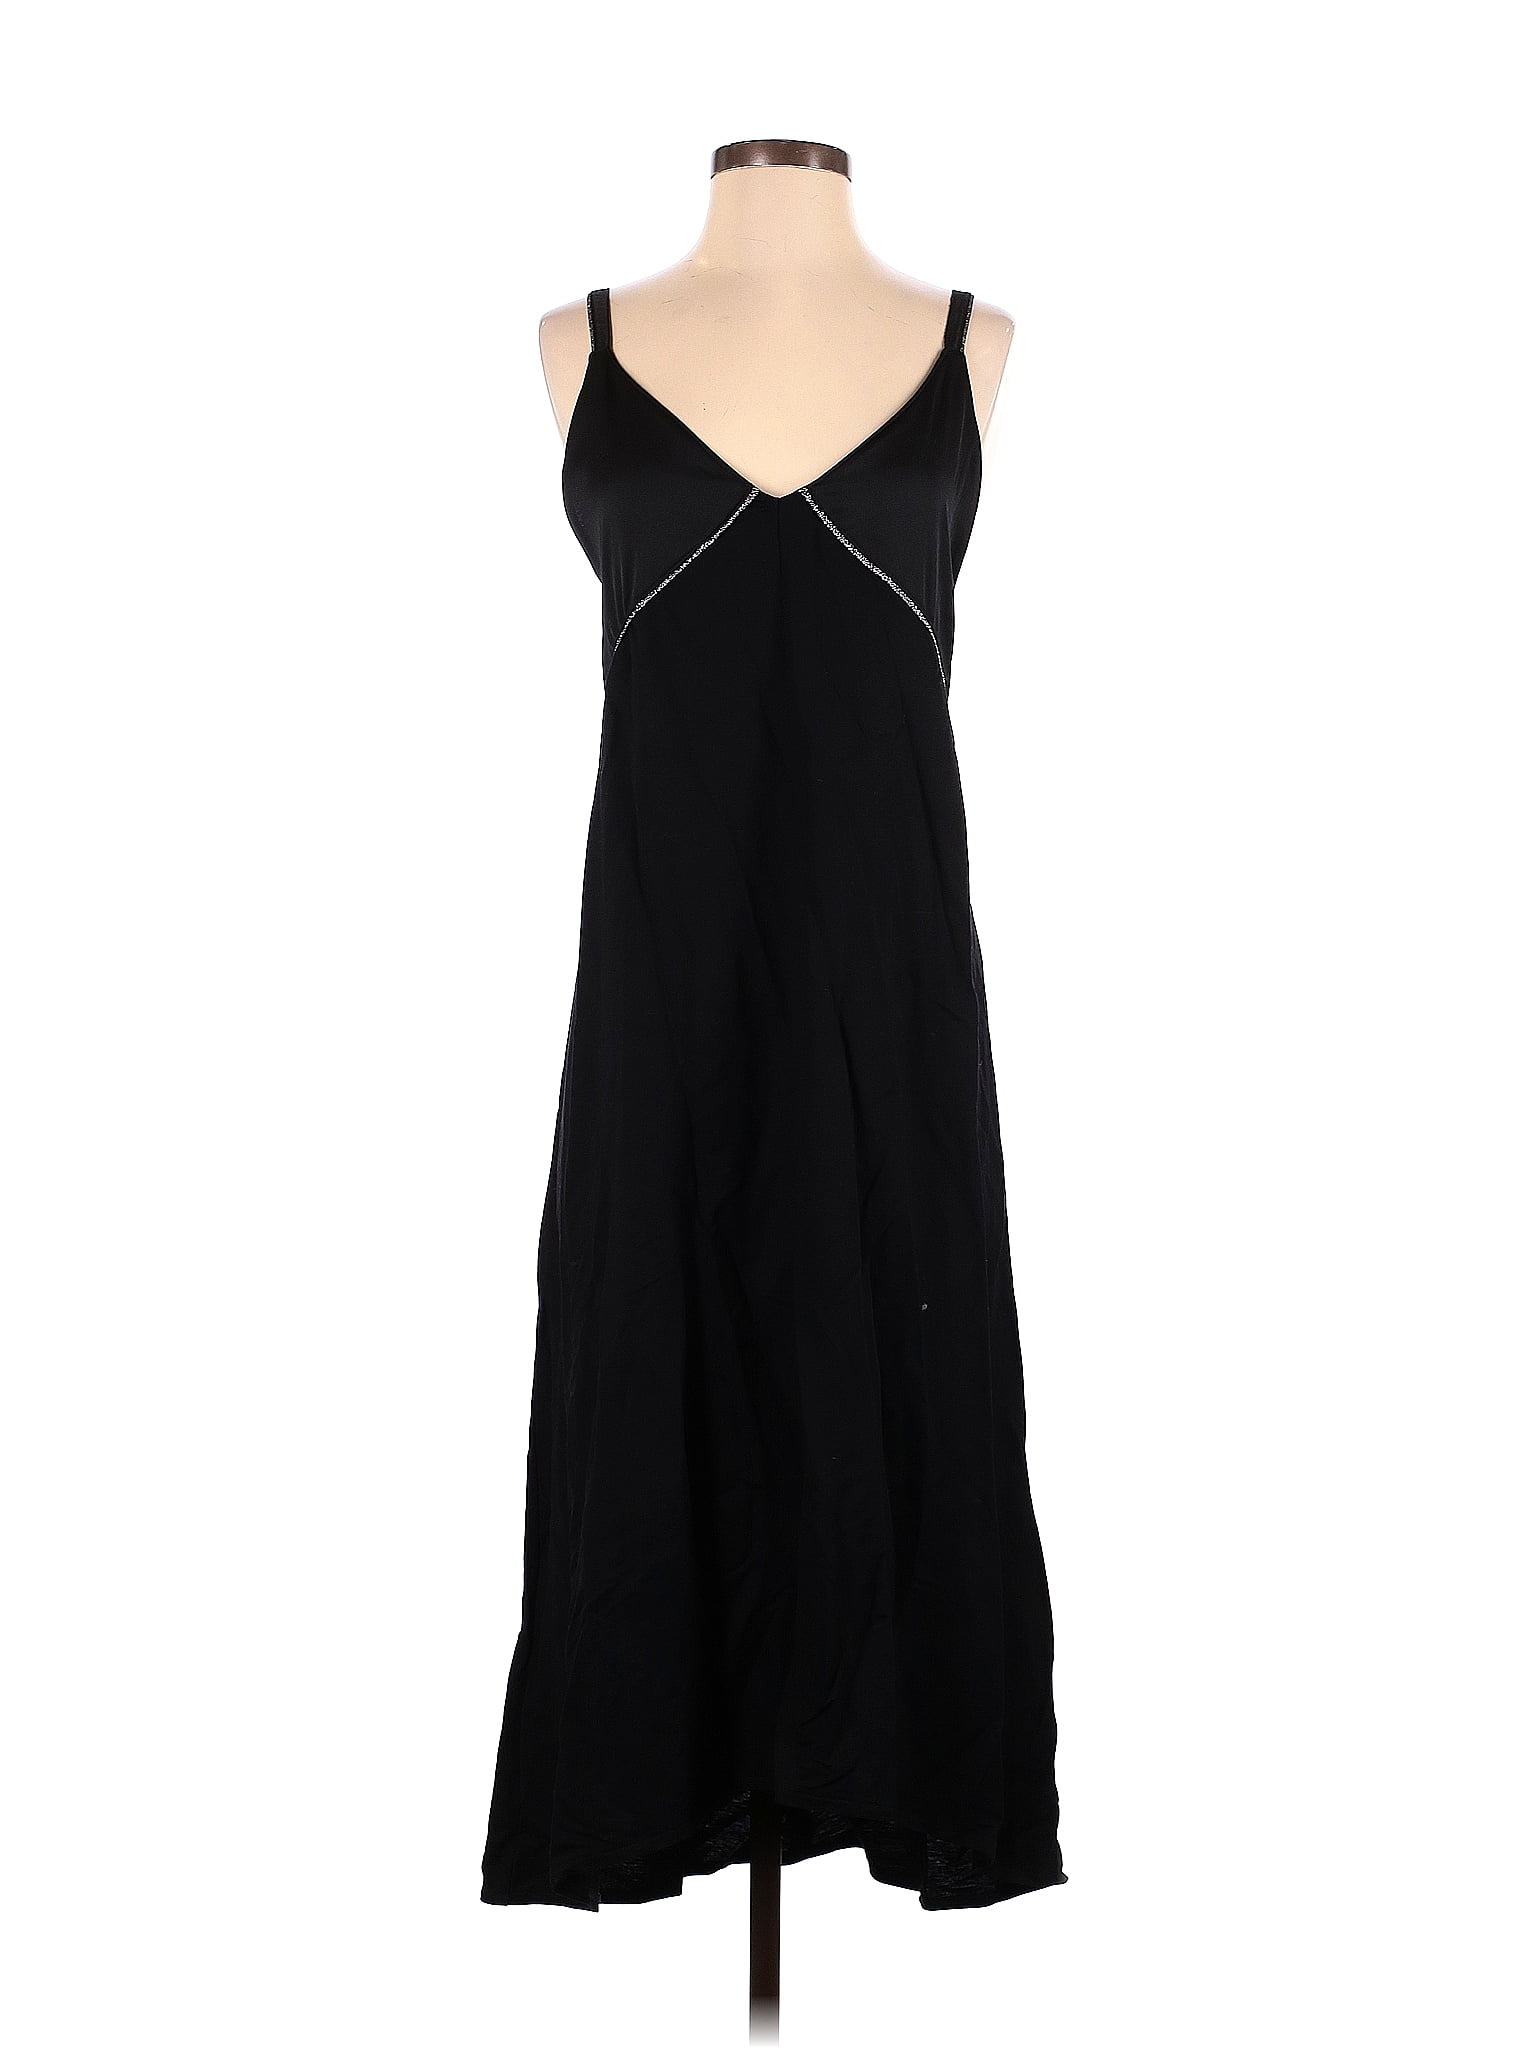 Zara Solid Black Casual Dress Size M - 44% off | thredUP